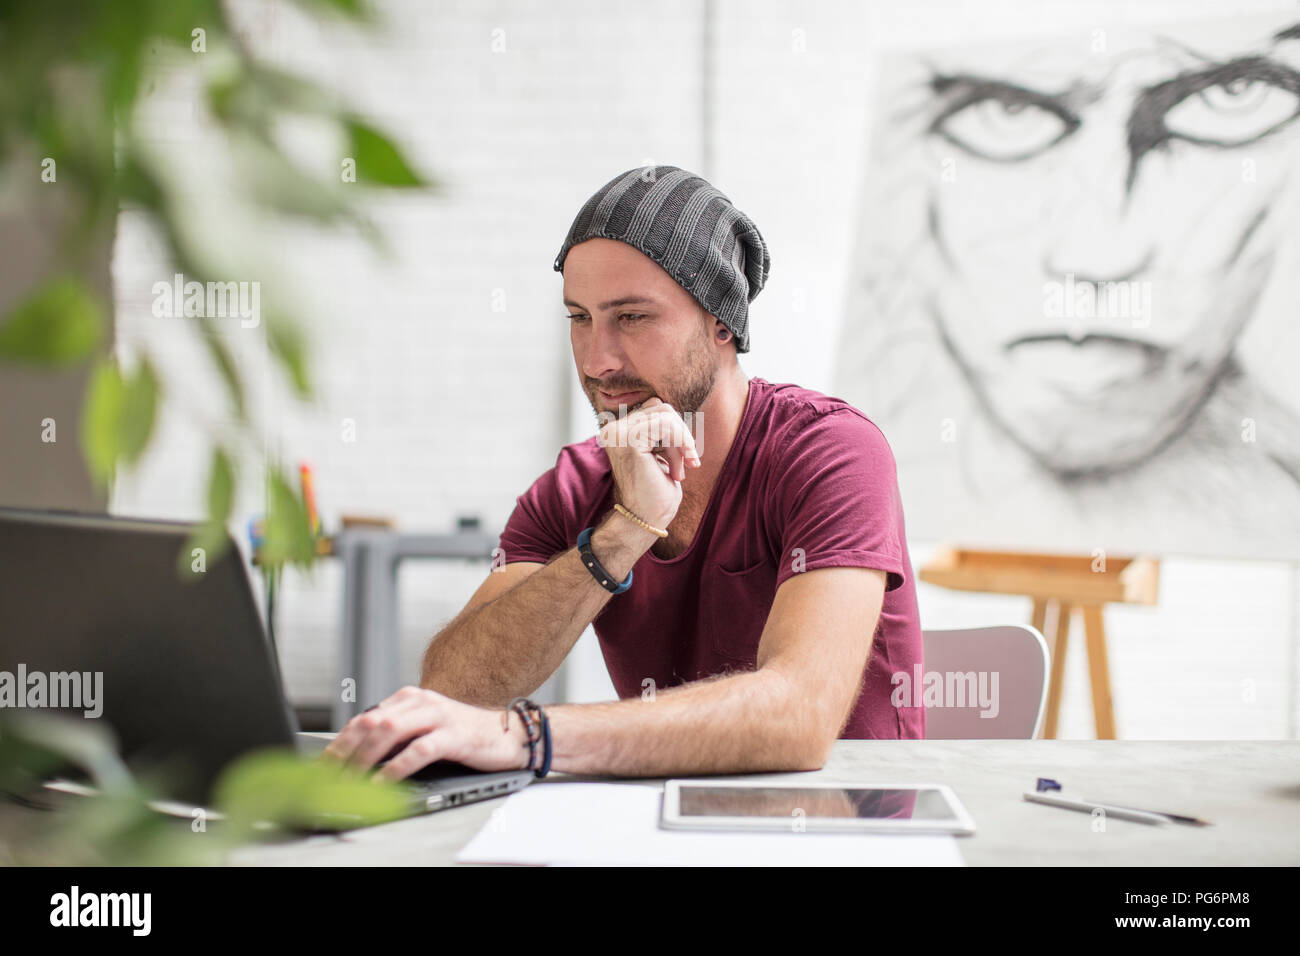 Artist using laptop in studio Stock Photo